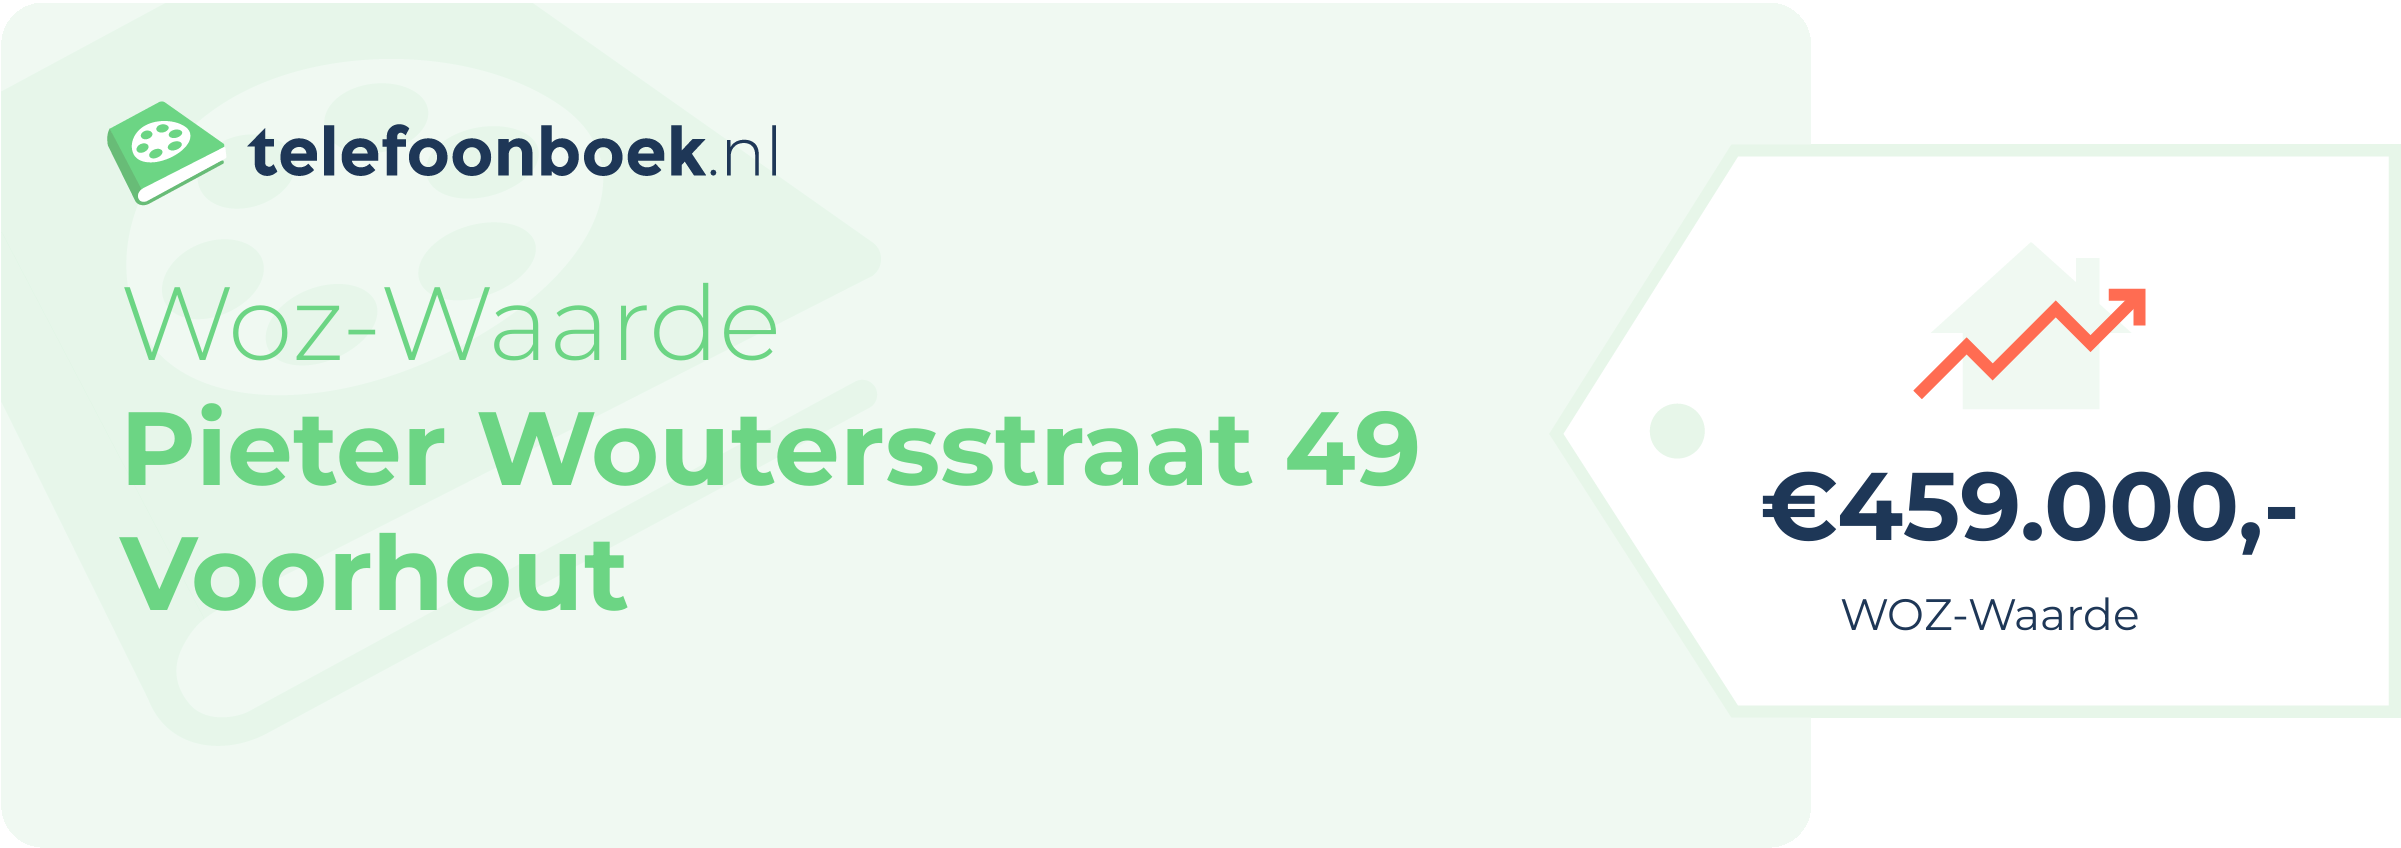 WOZ-waarde Pieter Woutersstraat 49 Voorhout